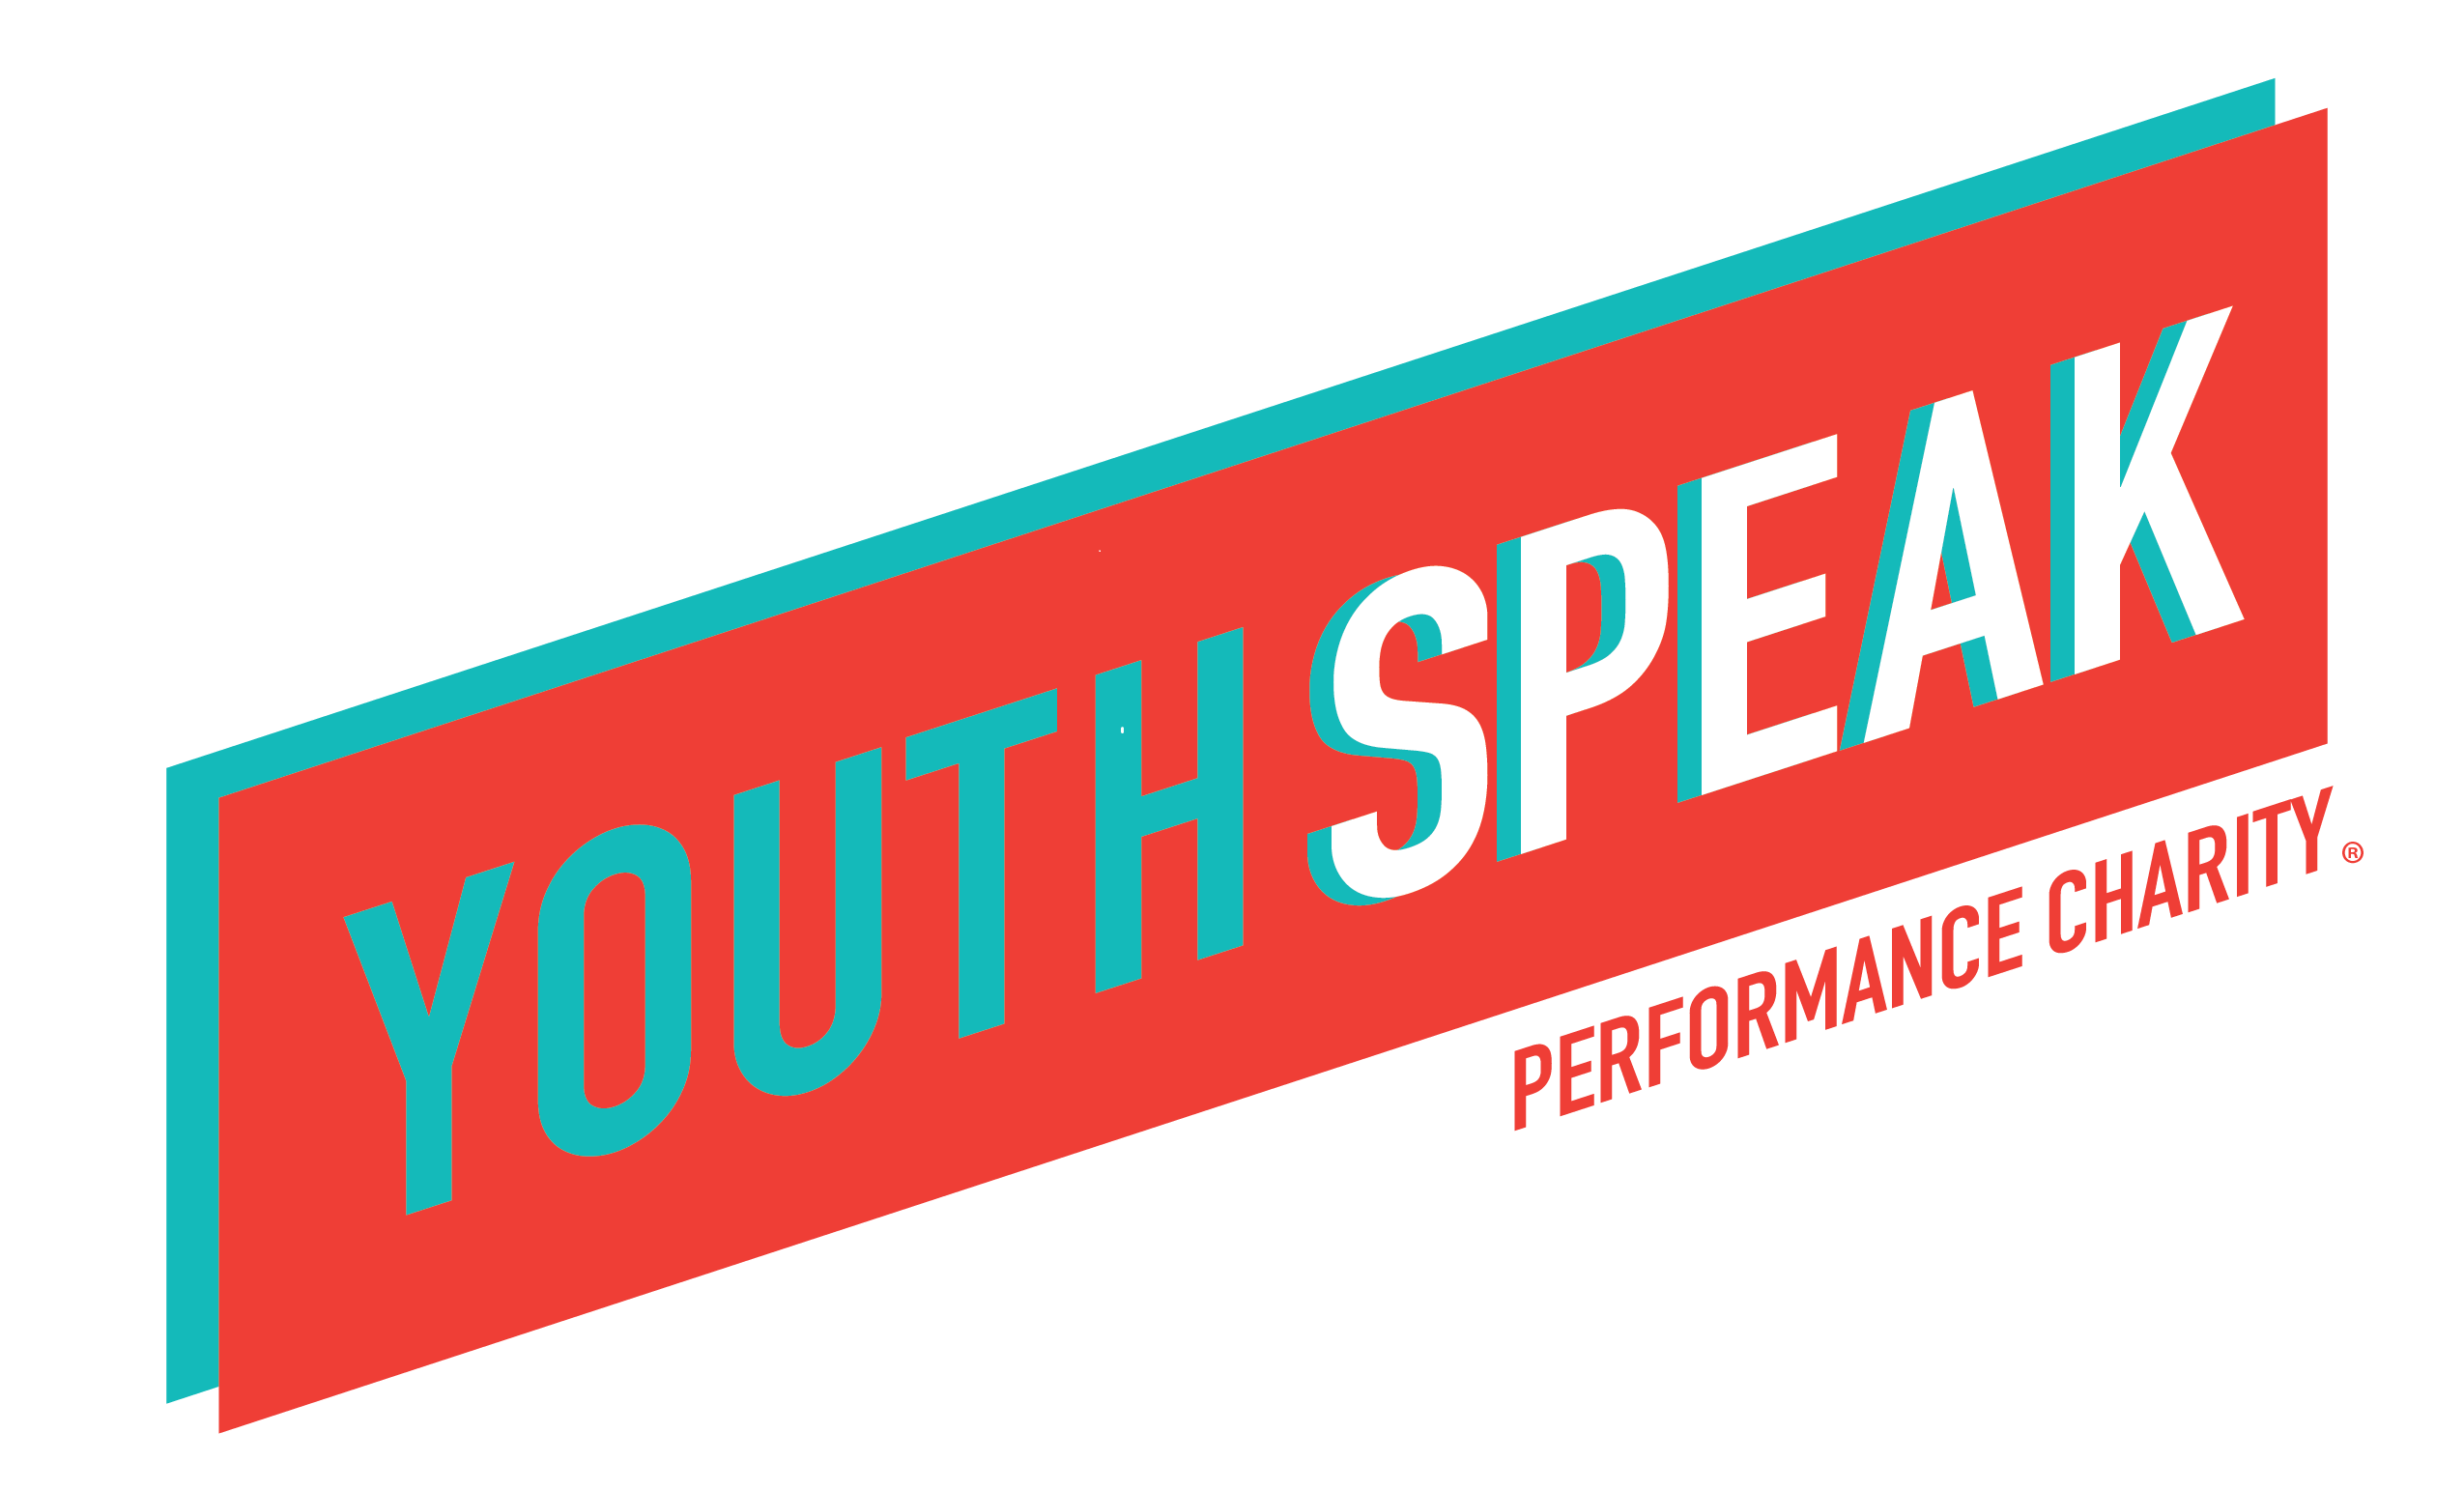 YouthSpeak Performance Charity